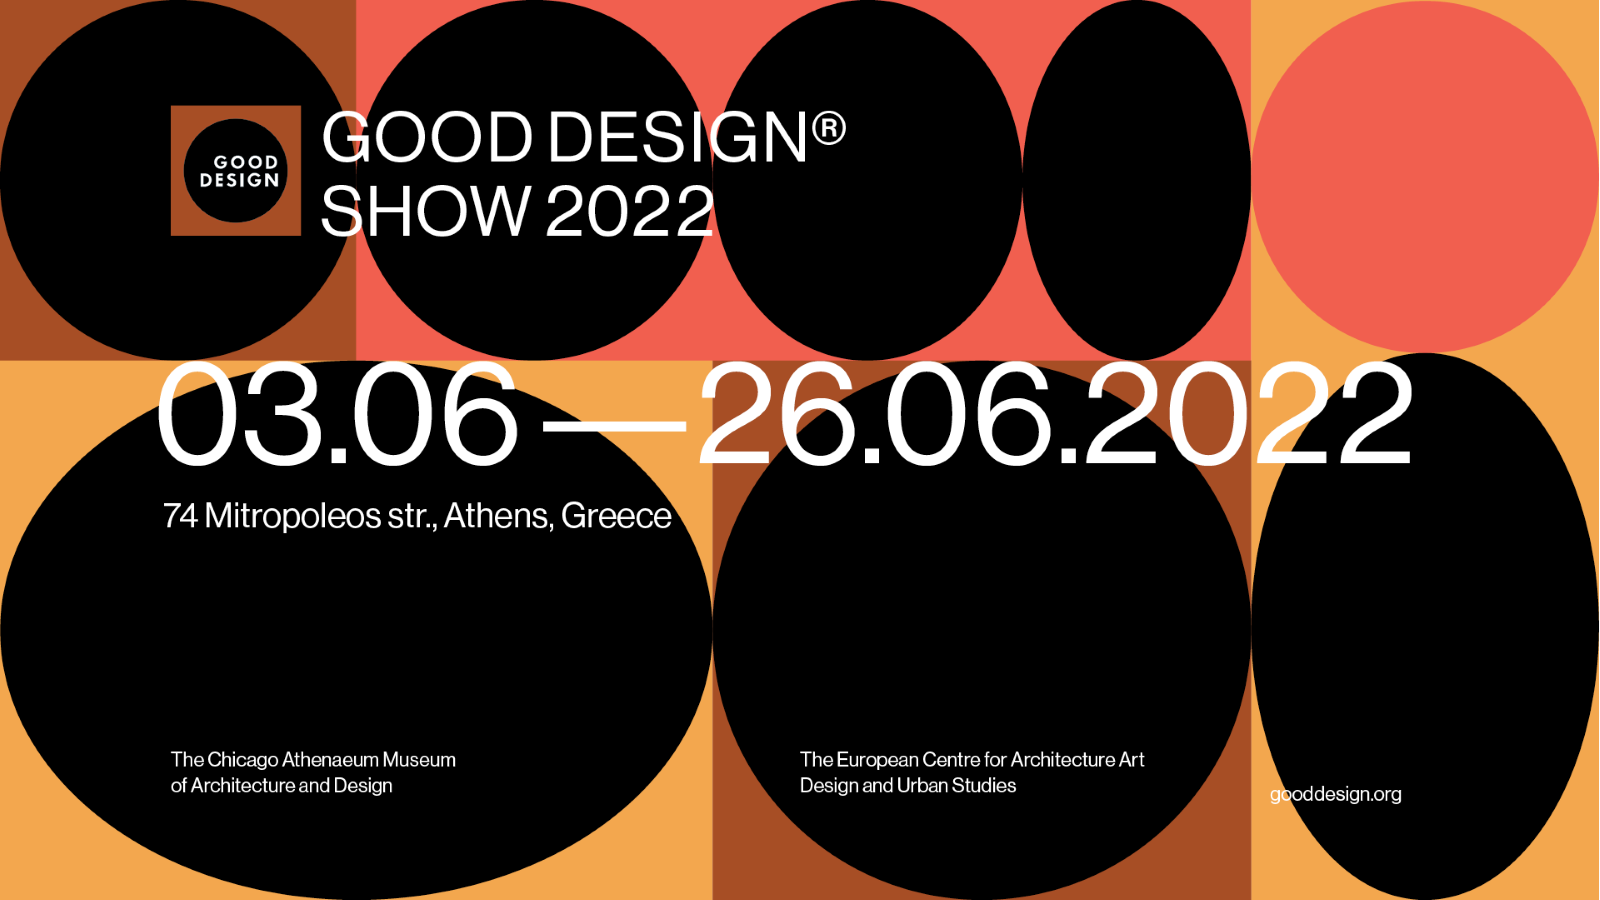 Archisearch The Annual Good Design Show - Η έκθεση για το θρυλικό πρόγραμμα σχεδιασμού και αρχιτεκτονικής GOOD DESIGN® με τίτλο Annual Good Design® Show ταξιδεύει στην Αθήνα αυτό το καλοκαίρι στις 3 Ιουνίου.